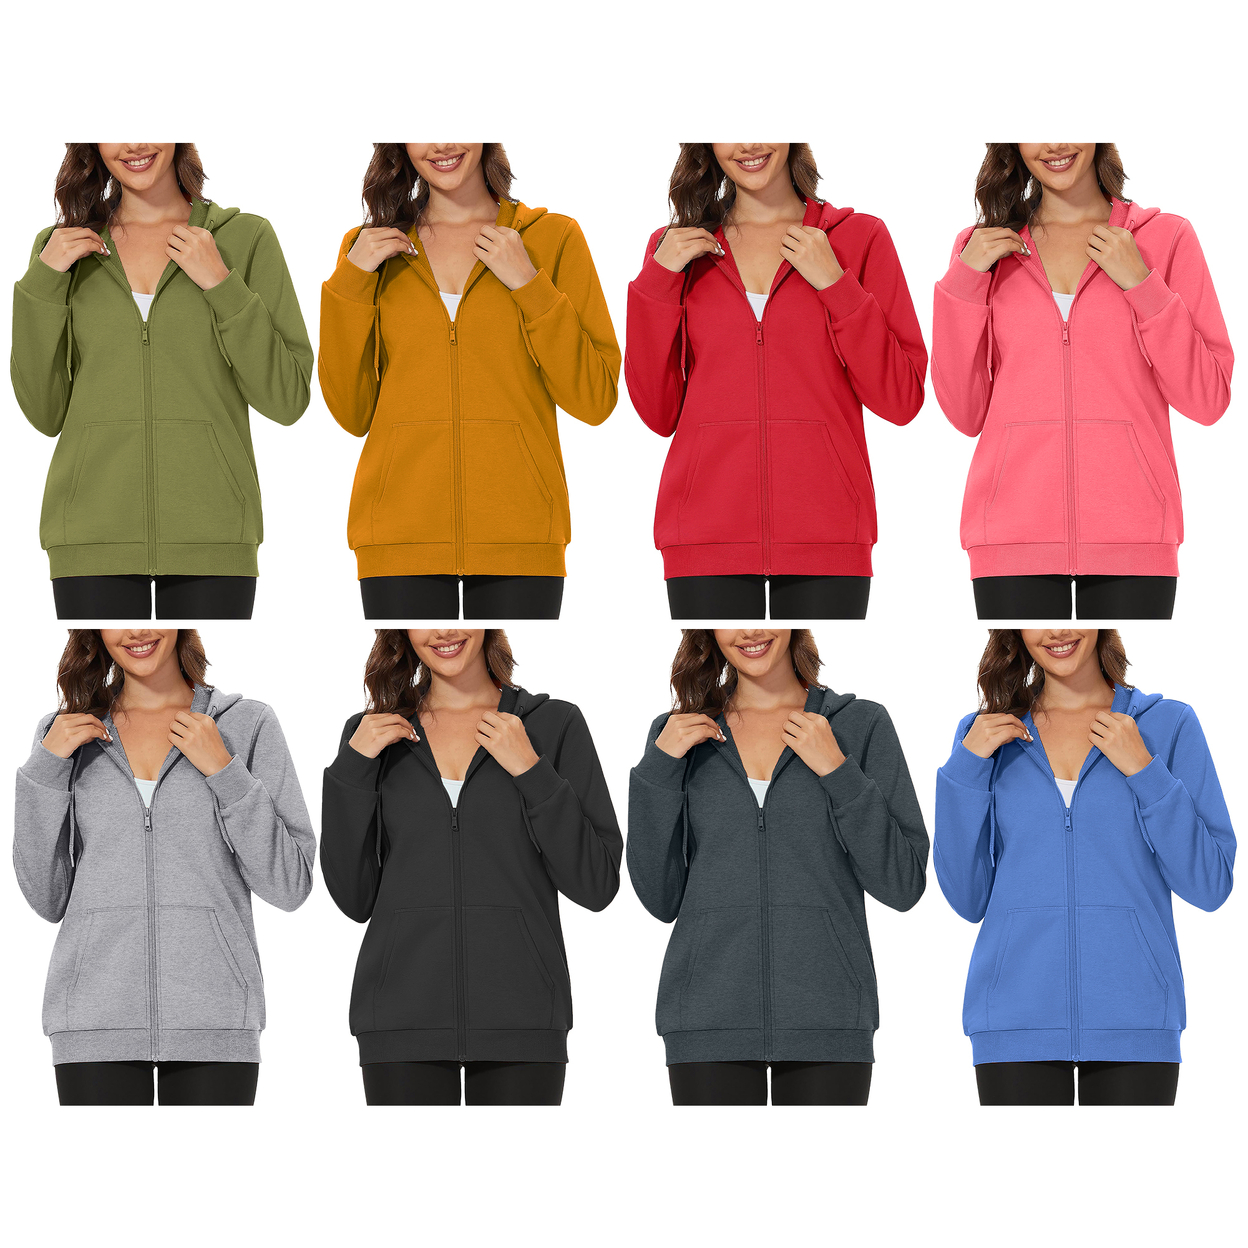 2-Pack: Women's Winter Warm Soft Blend Fleece Lined Full Zip Up Hoodies - Large